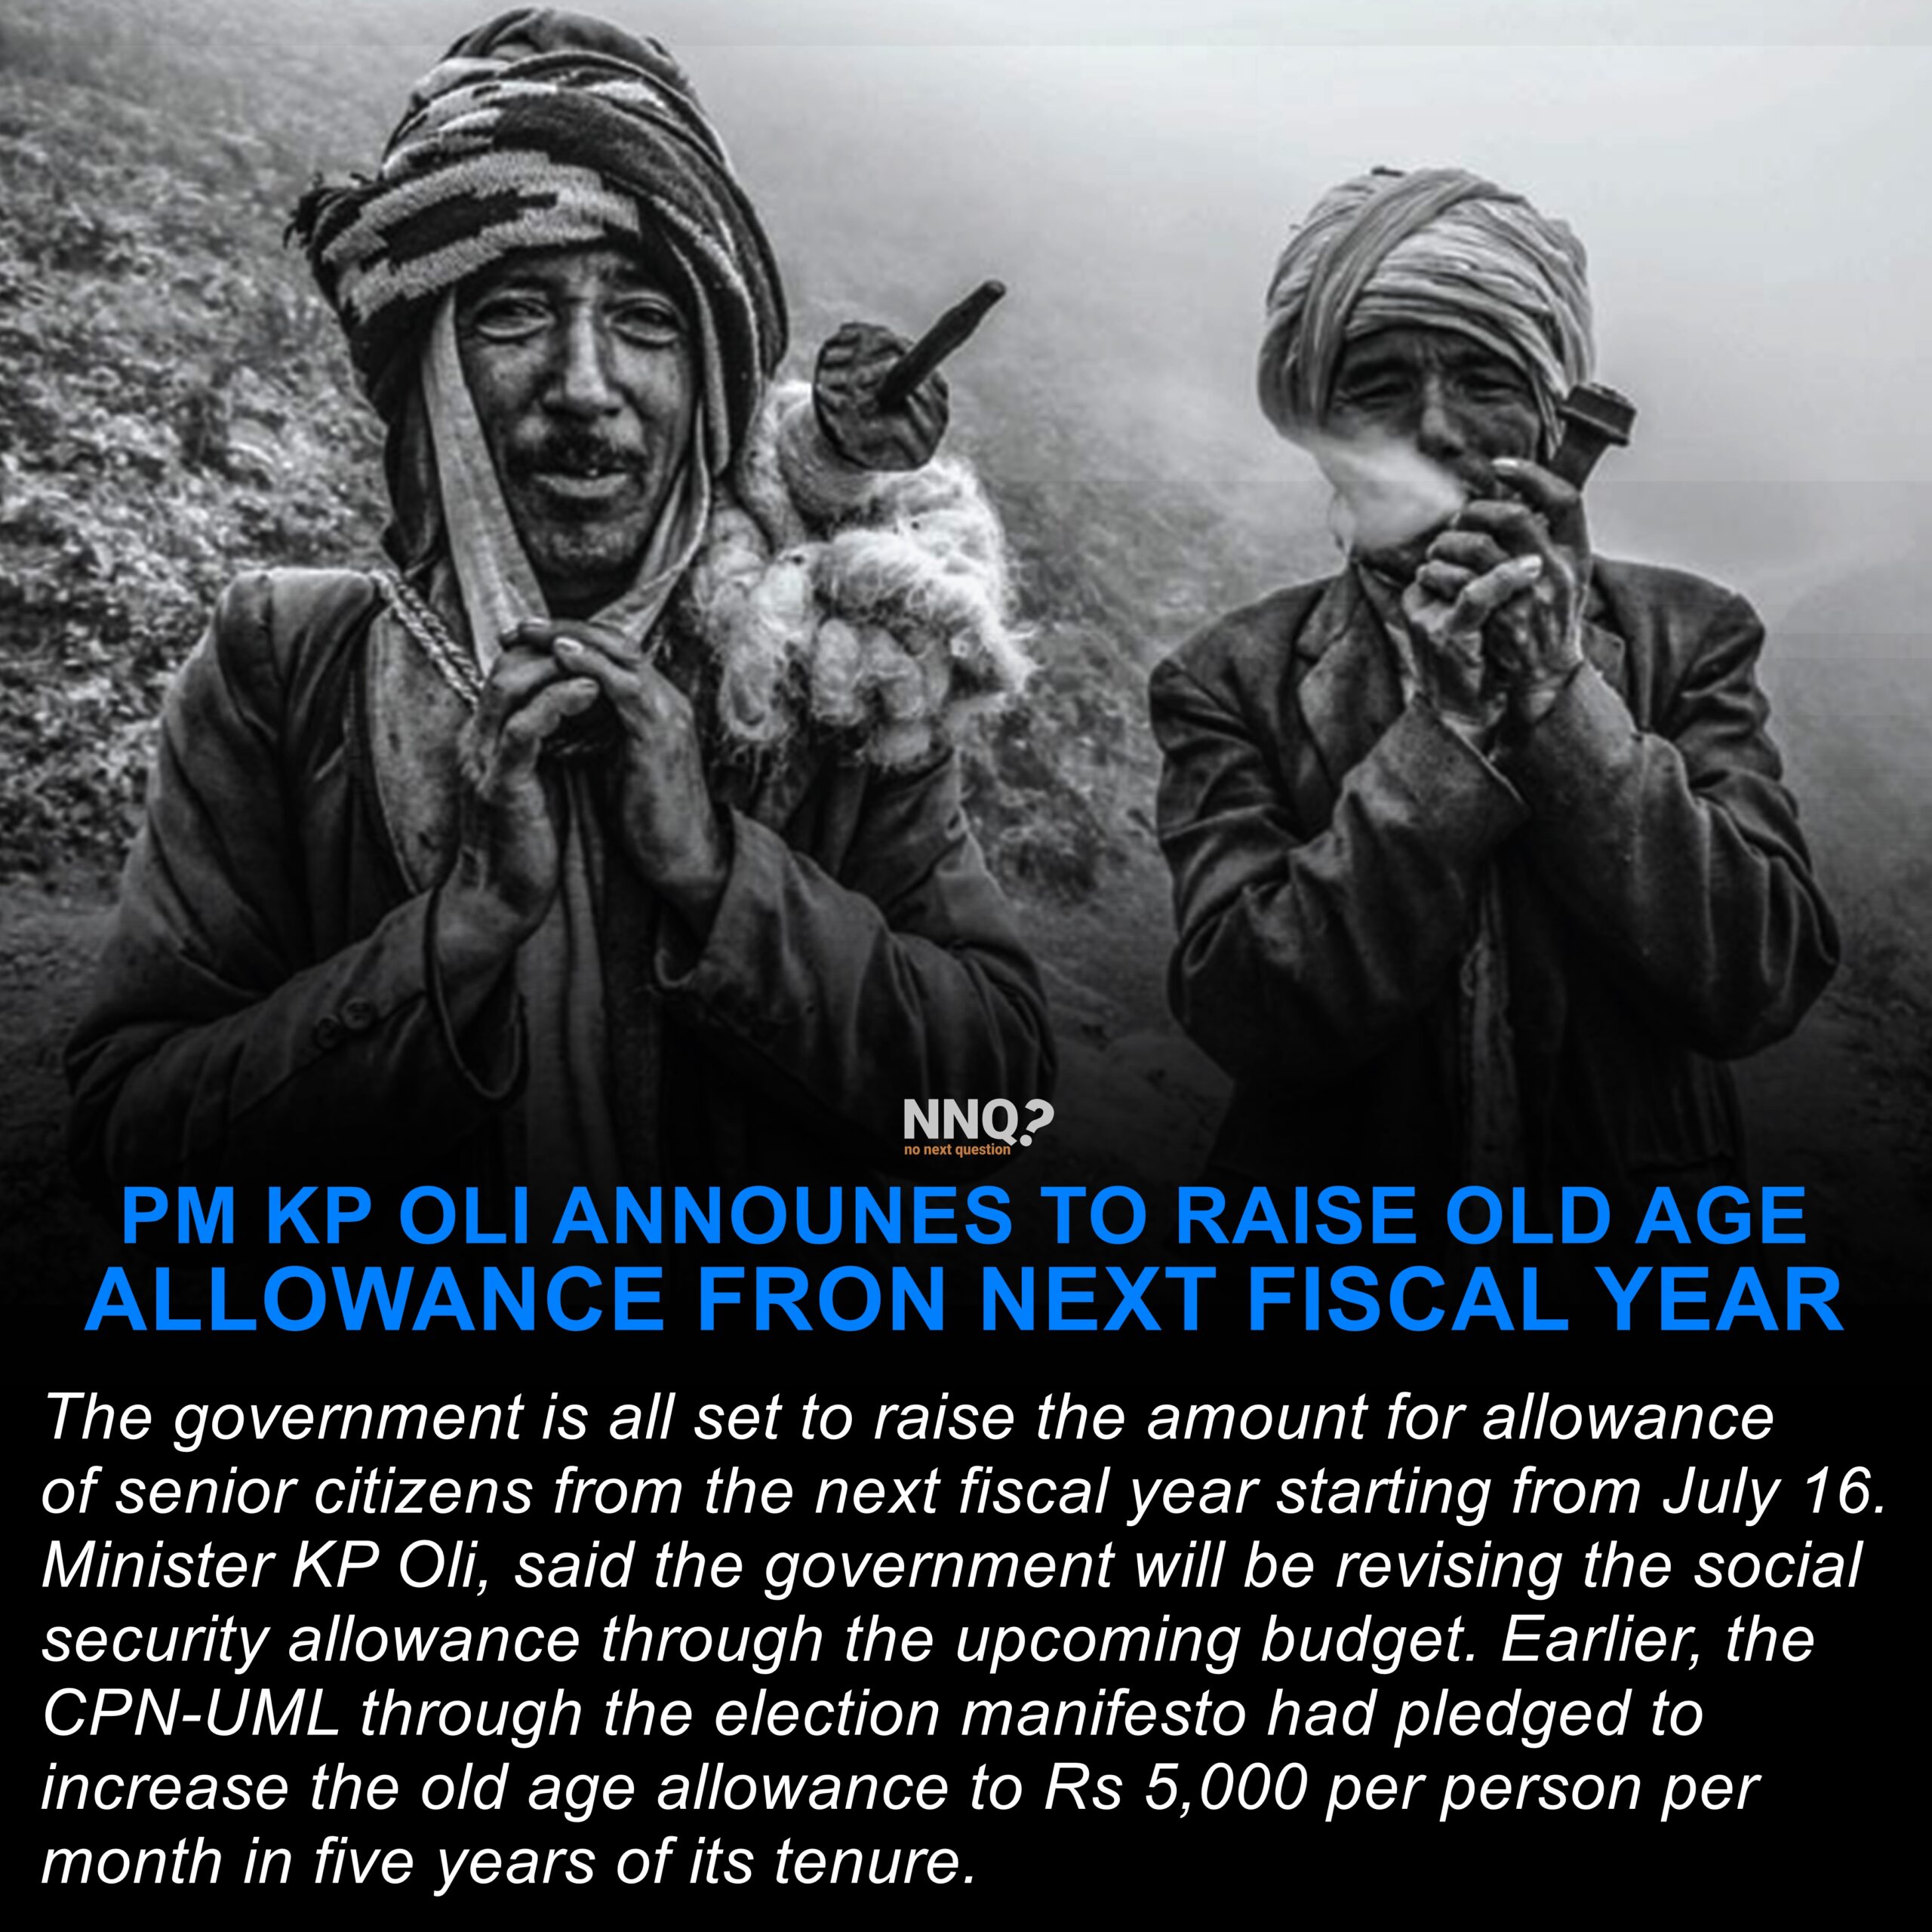 PM KP OLI ANNOUNES TO RAISE OLD AGE ALLOWANCE